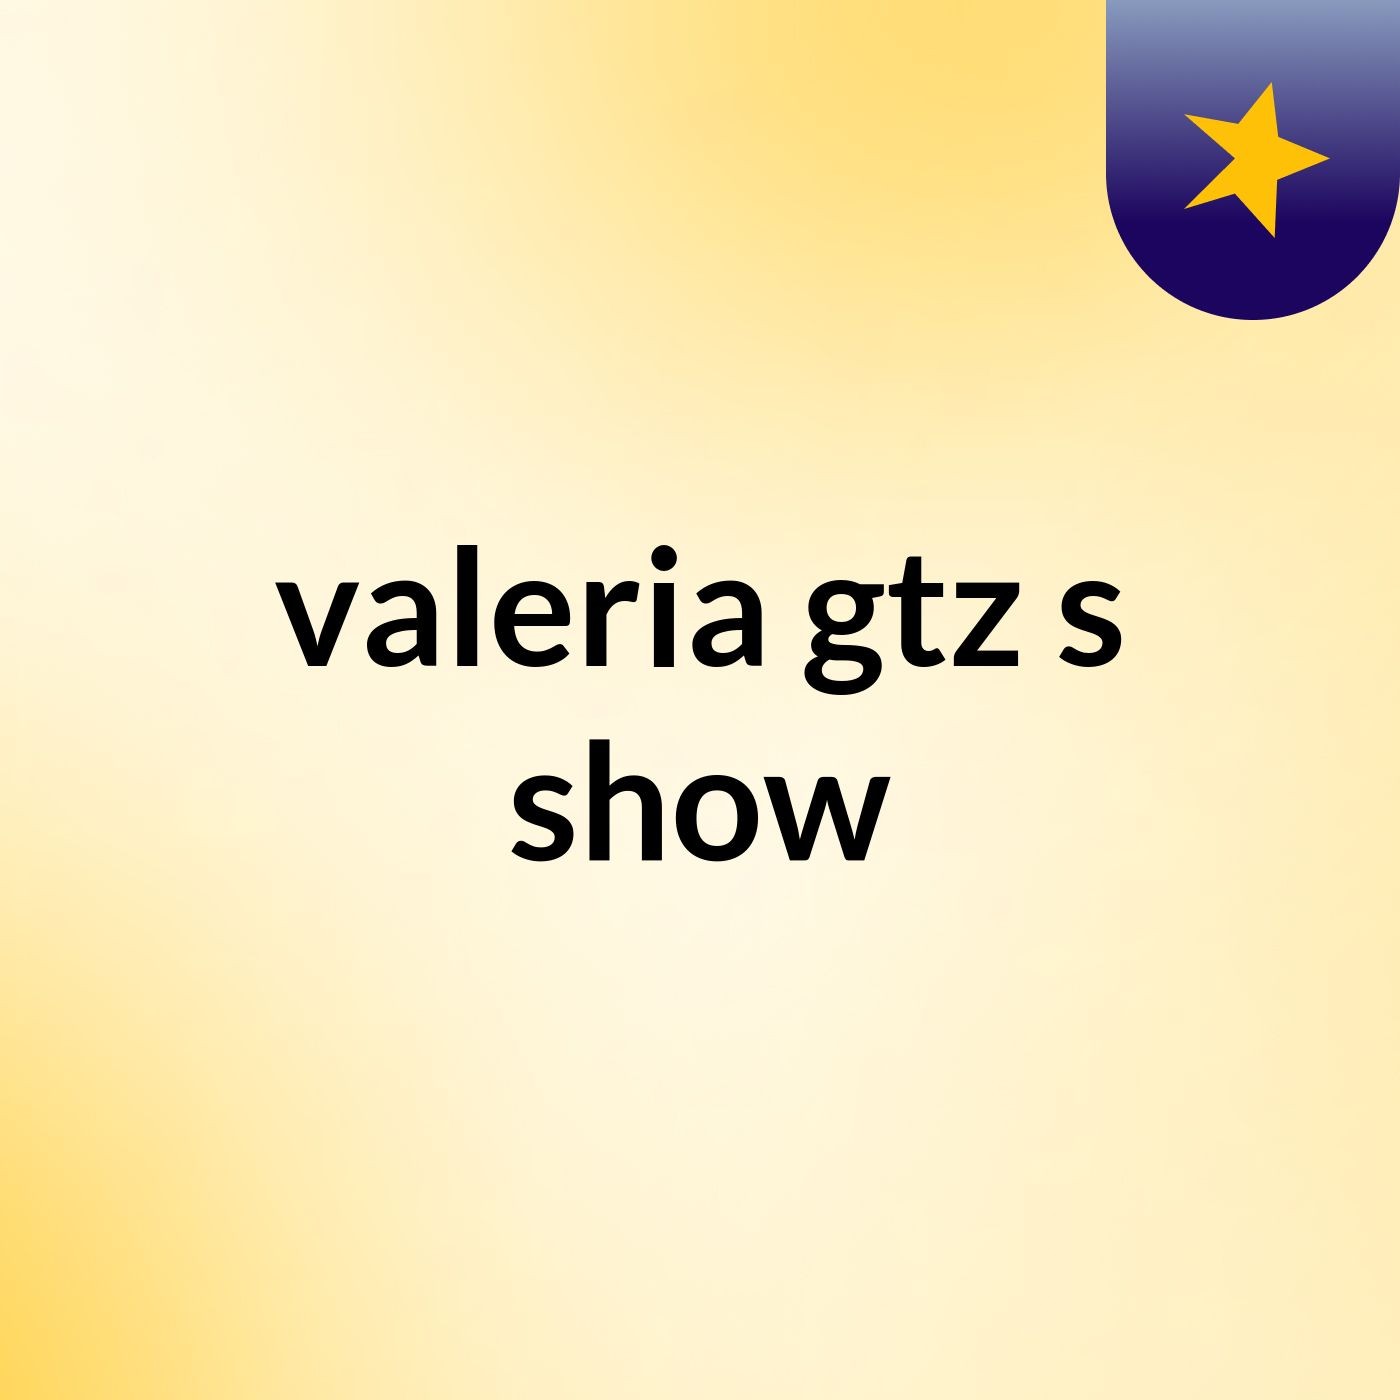 valeria gtz's show